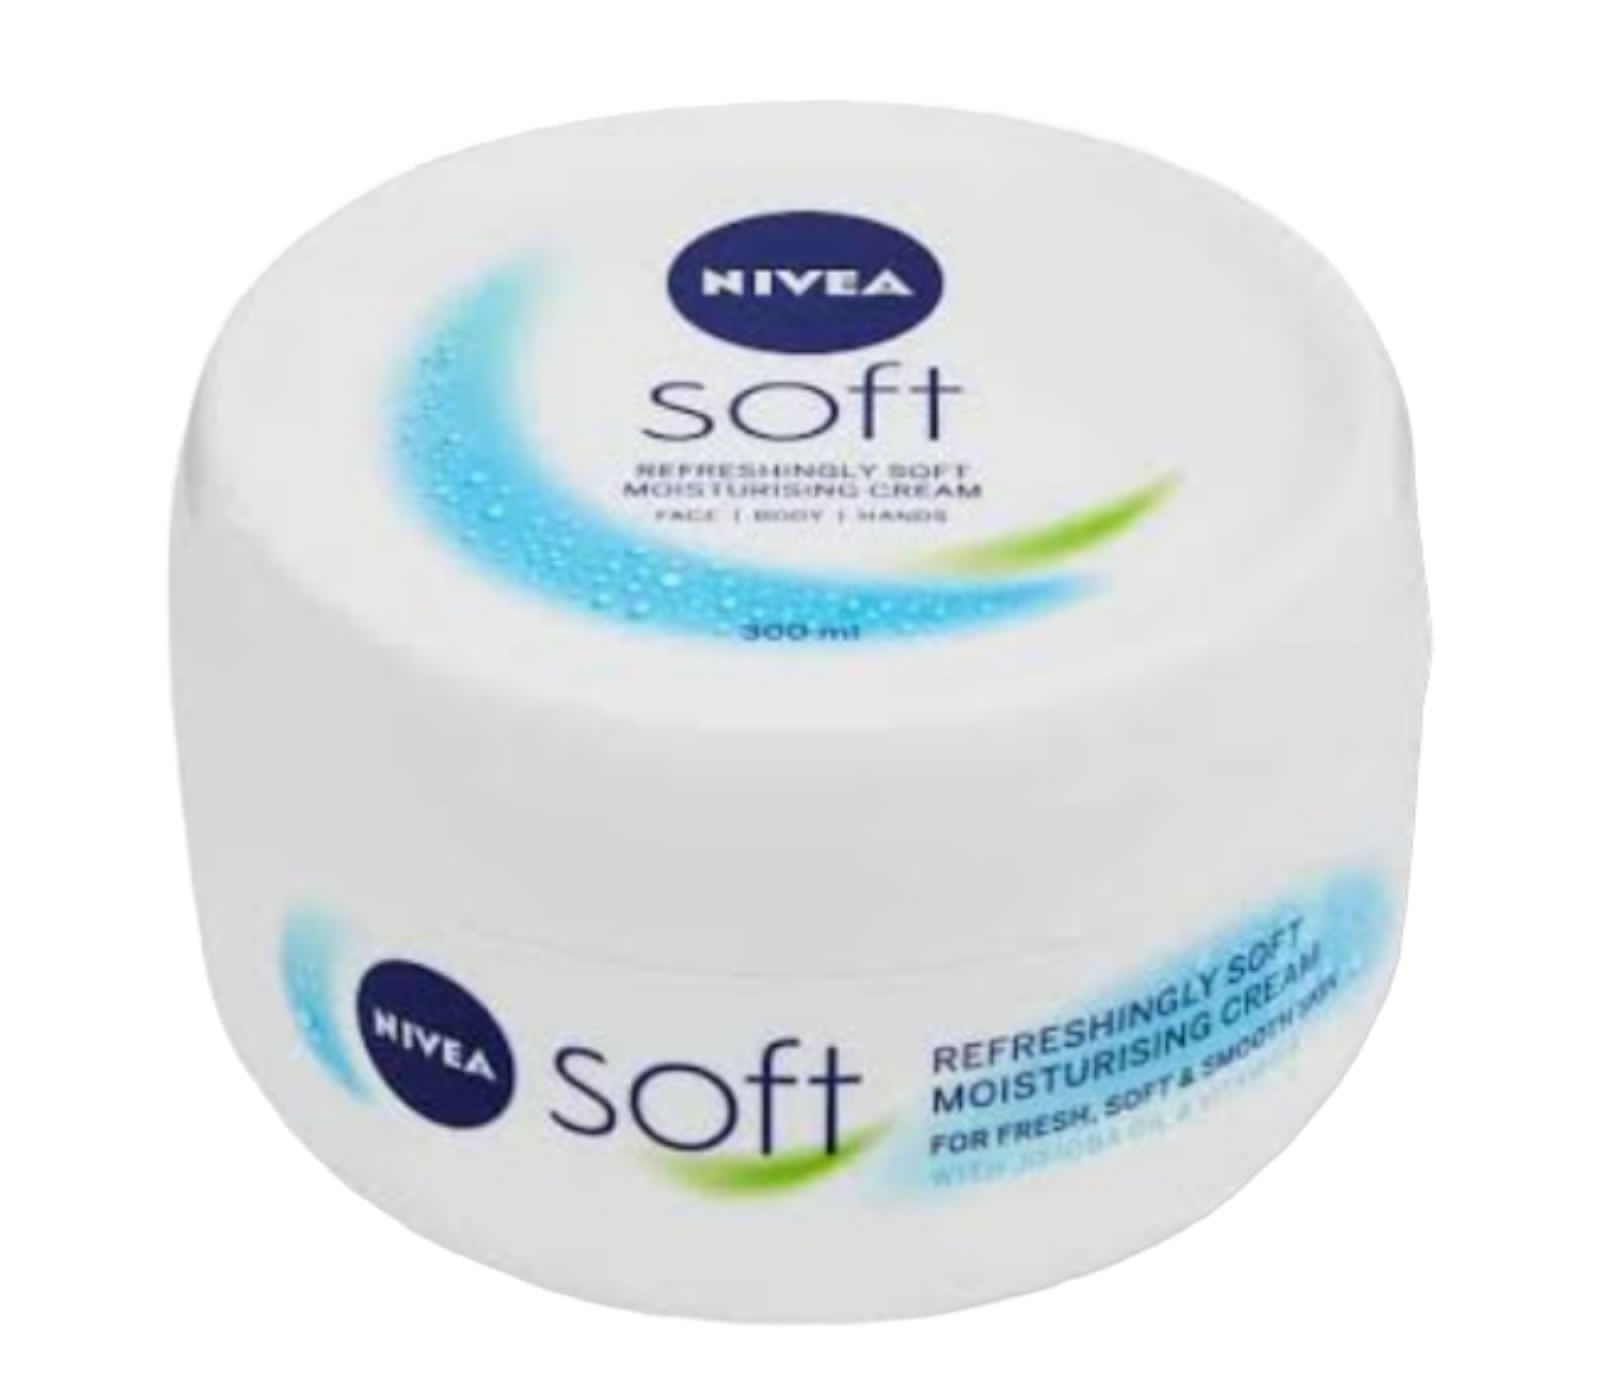 Nivea Soft cream